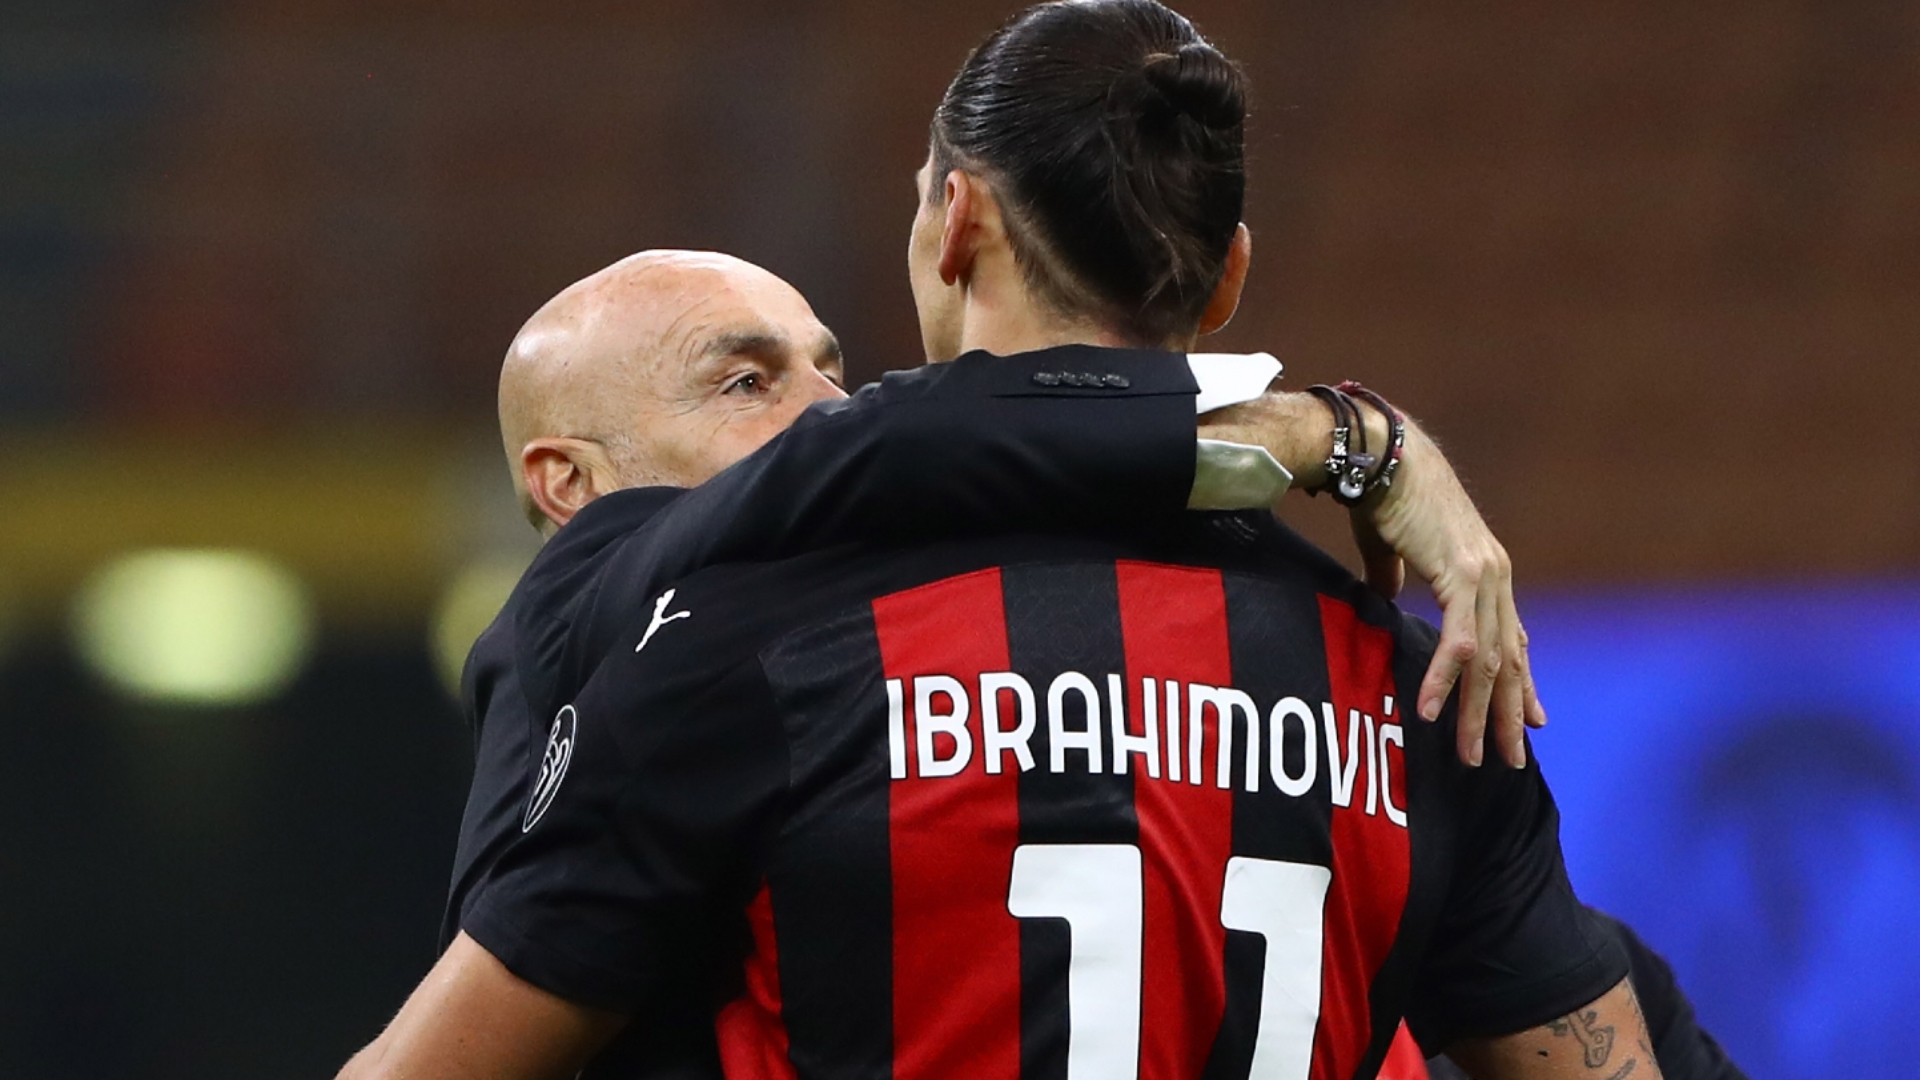 was a godsend' - Pioli hails Ibrahimovic arrival at AC Milan | Goal.com